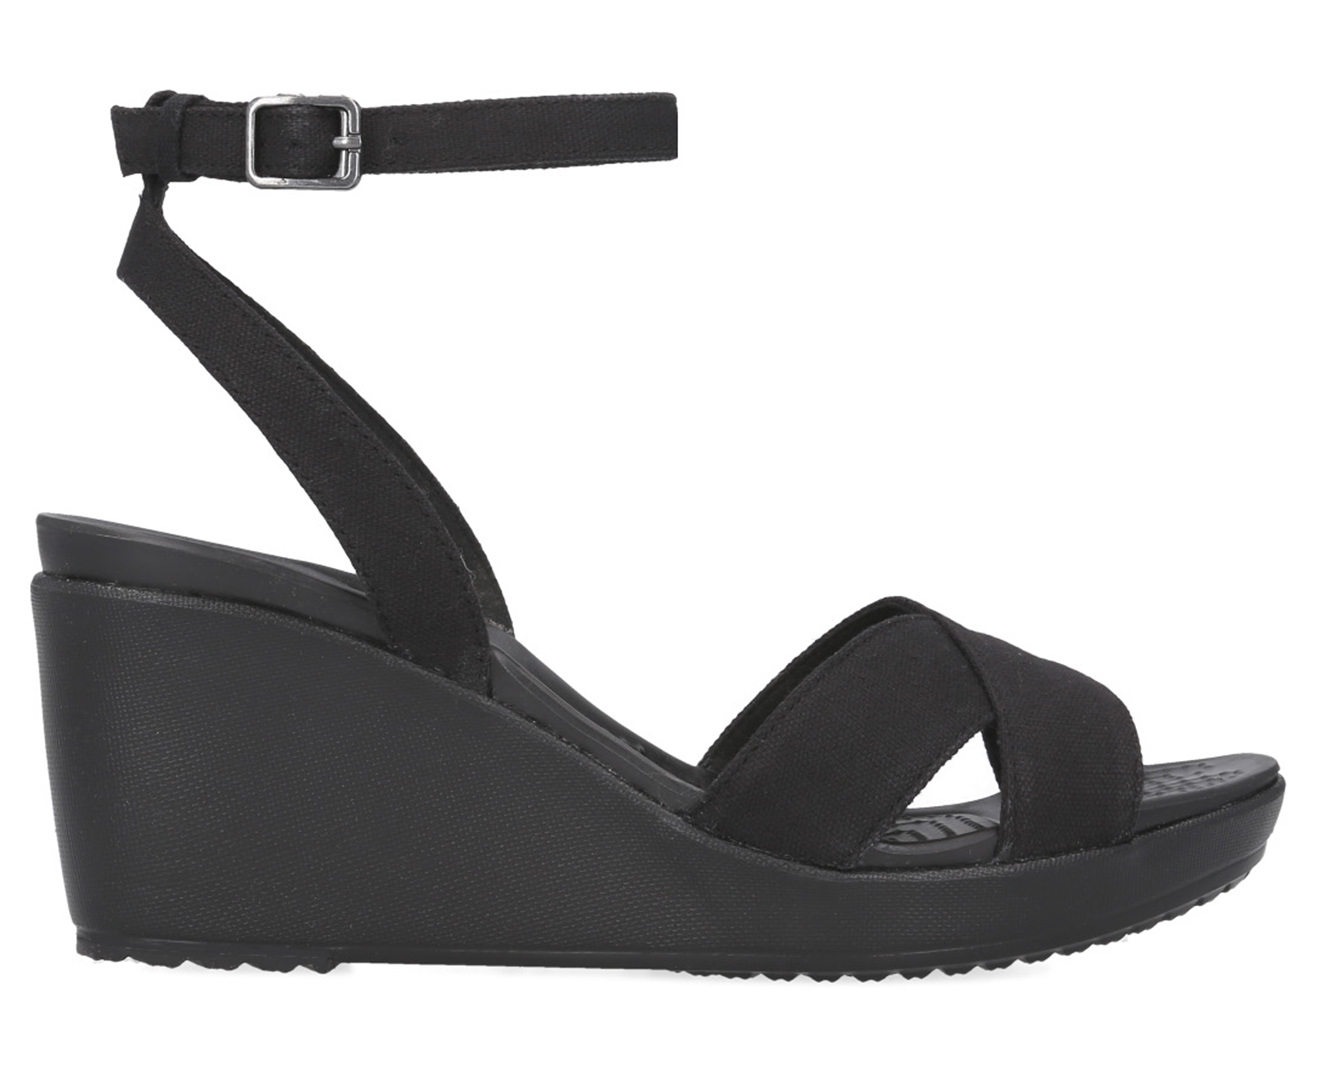 Crocs Women's Leigh II Cross-Strap Ankle Wedge Sandals - Black/Black ...